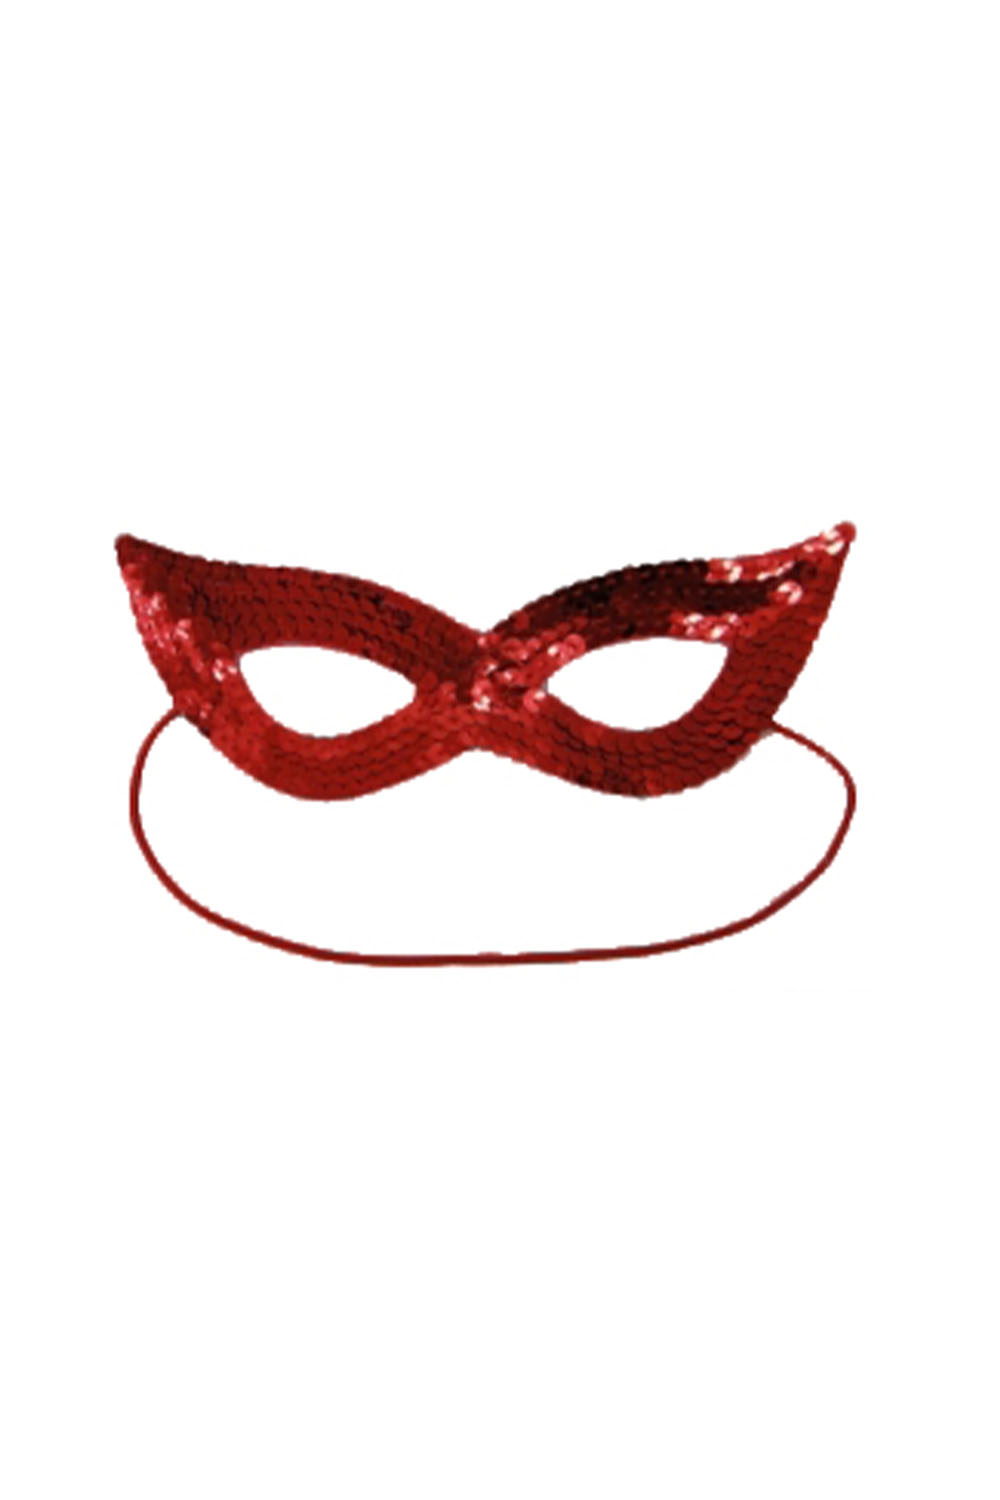 Sequin Red Face Masks (pack of 12)